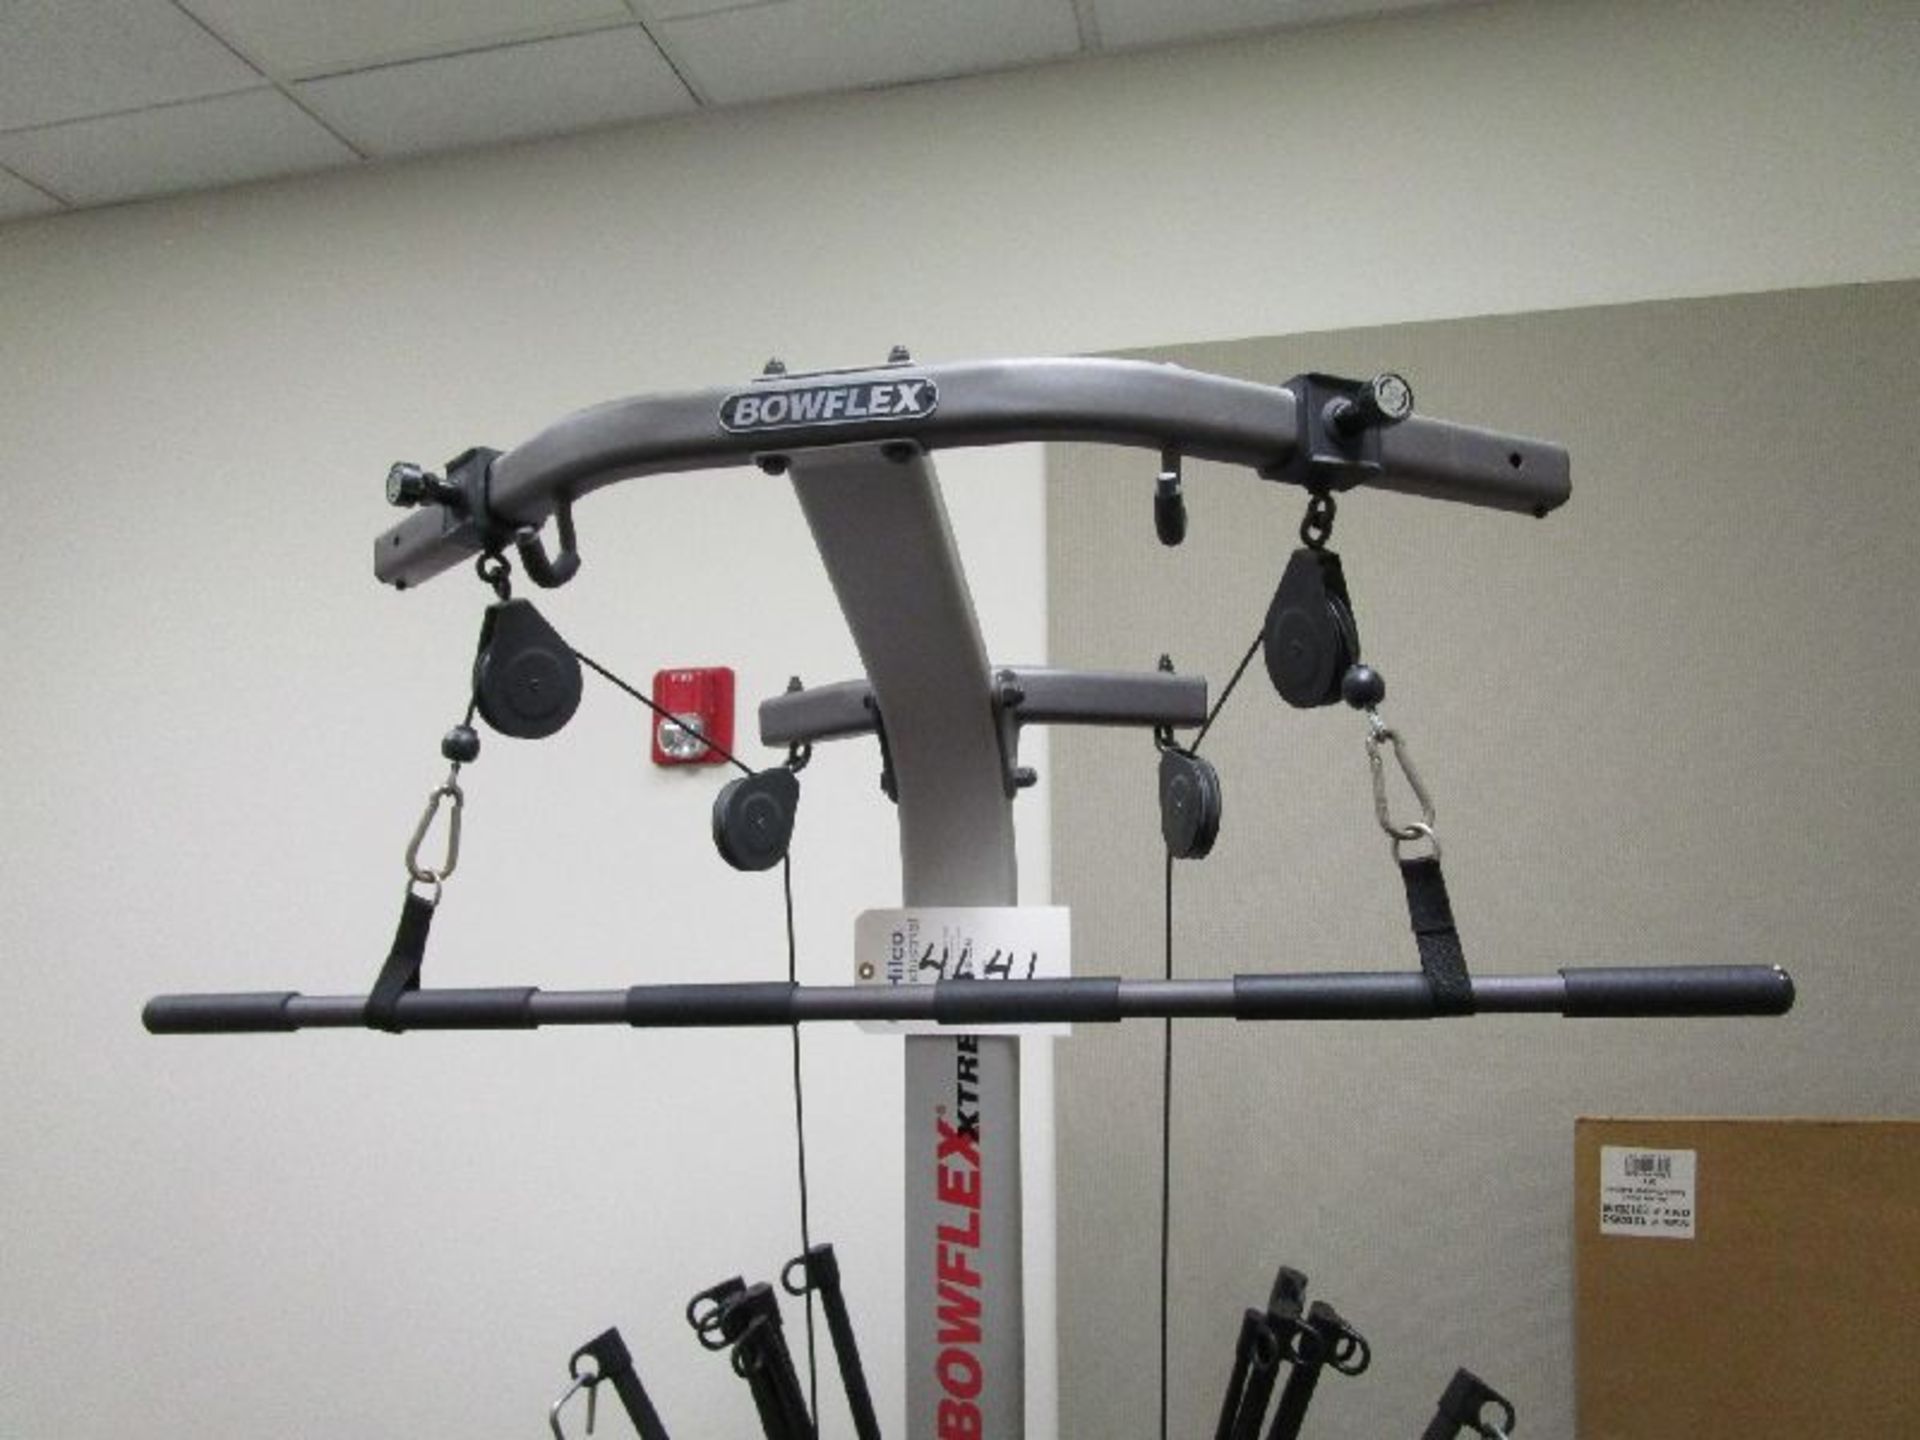 Bowflex Model Extreme X2 Home Gym Exercise Station - Image 2 of 8